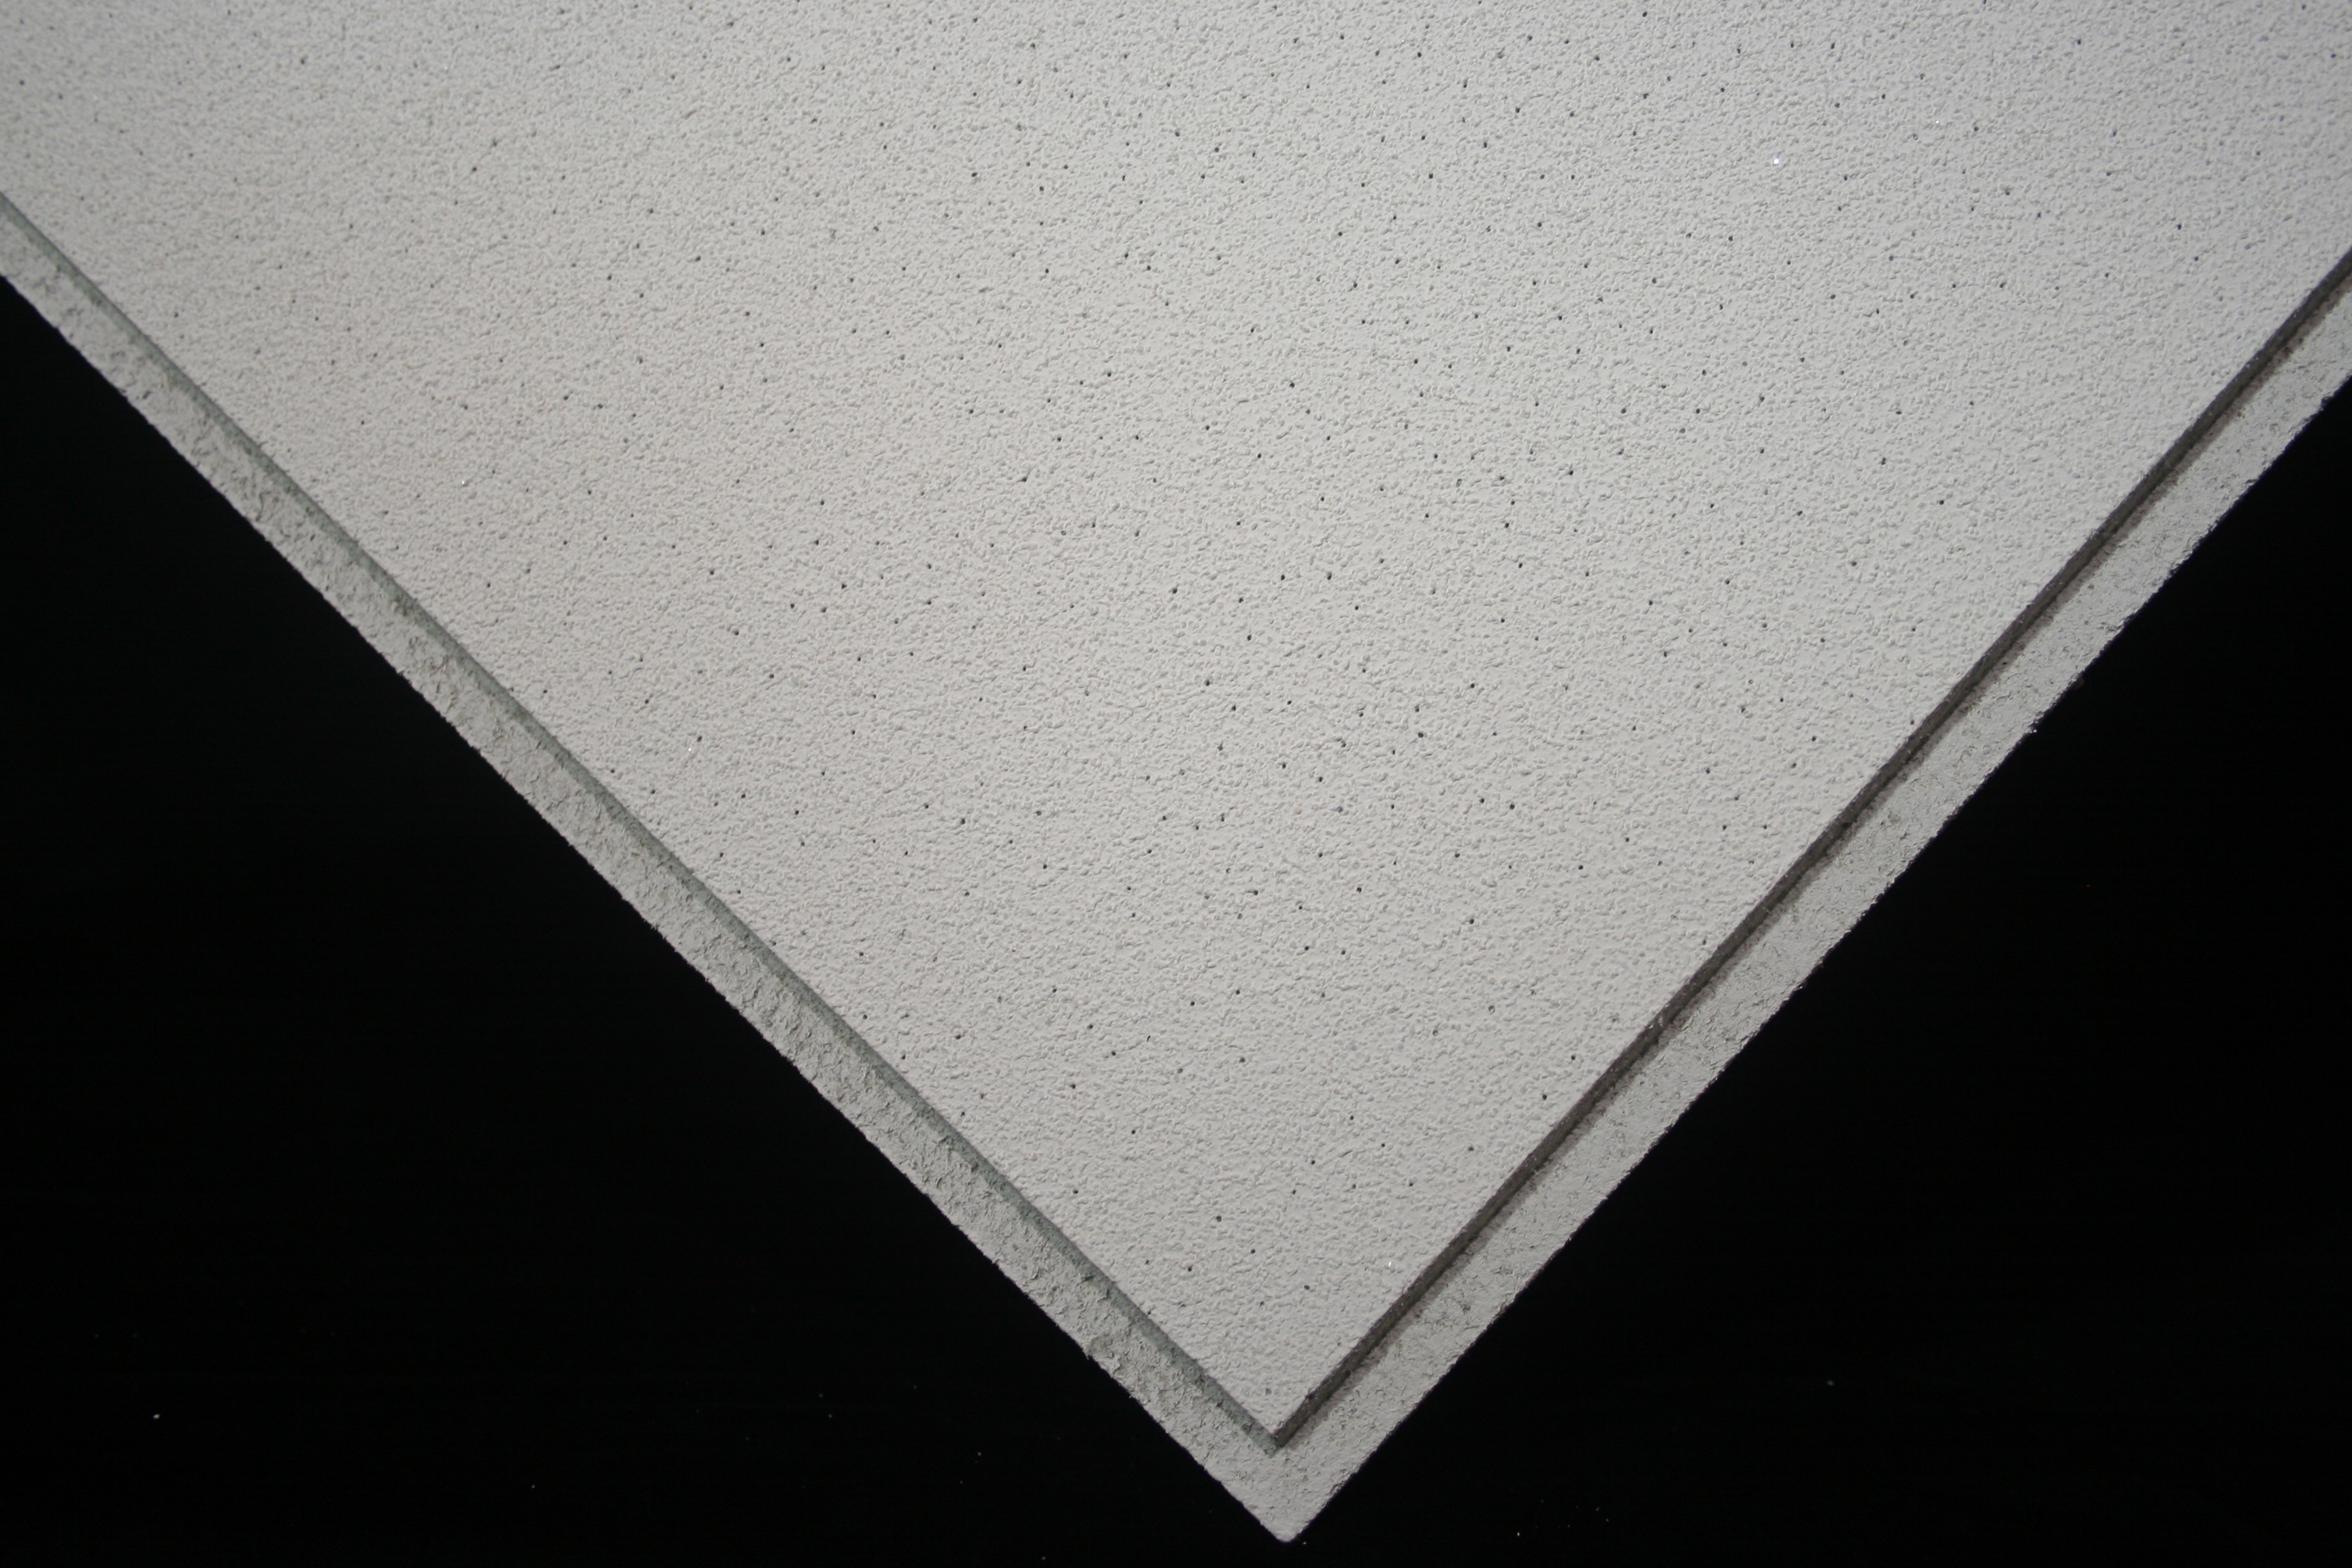 Dune Microlook Ceiling Tiles Dune Microlook Ceiling Tiles mineral fibre ceiling tile owa cosmos lacasemu 3456 X 2304